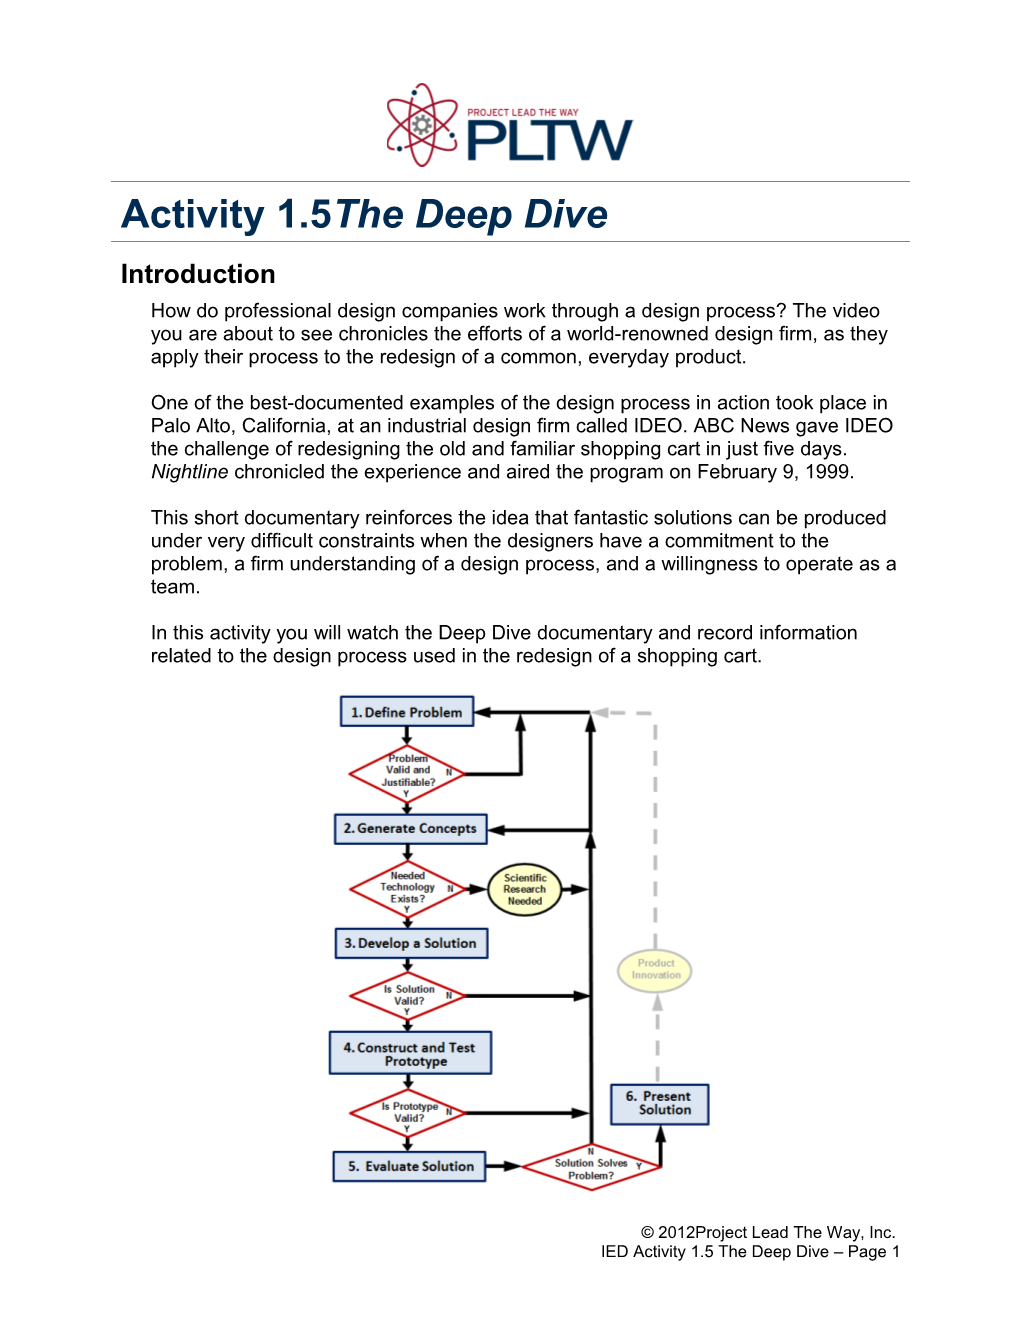 Activity 1.5 the Deep Dive